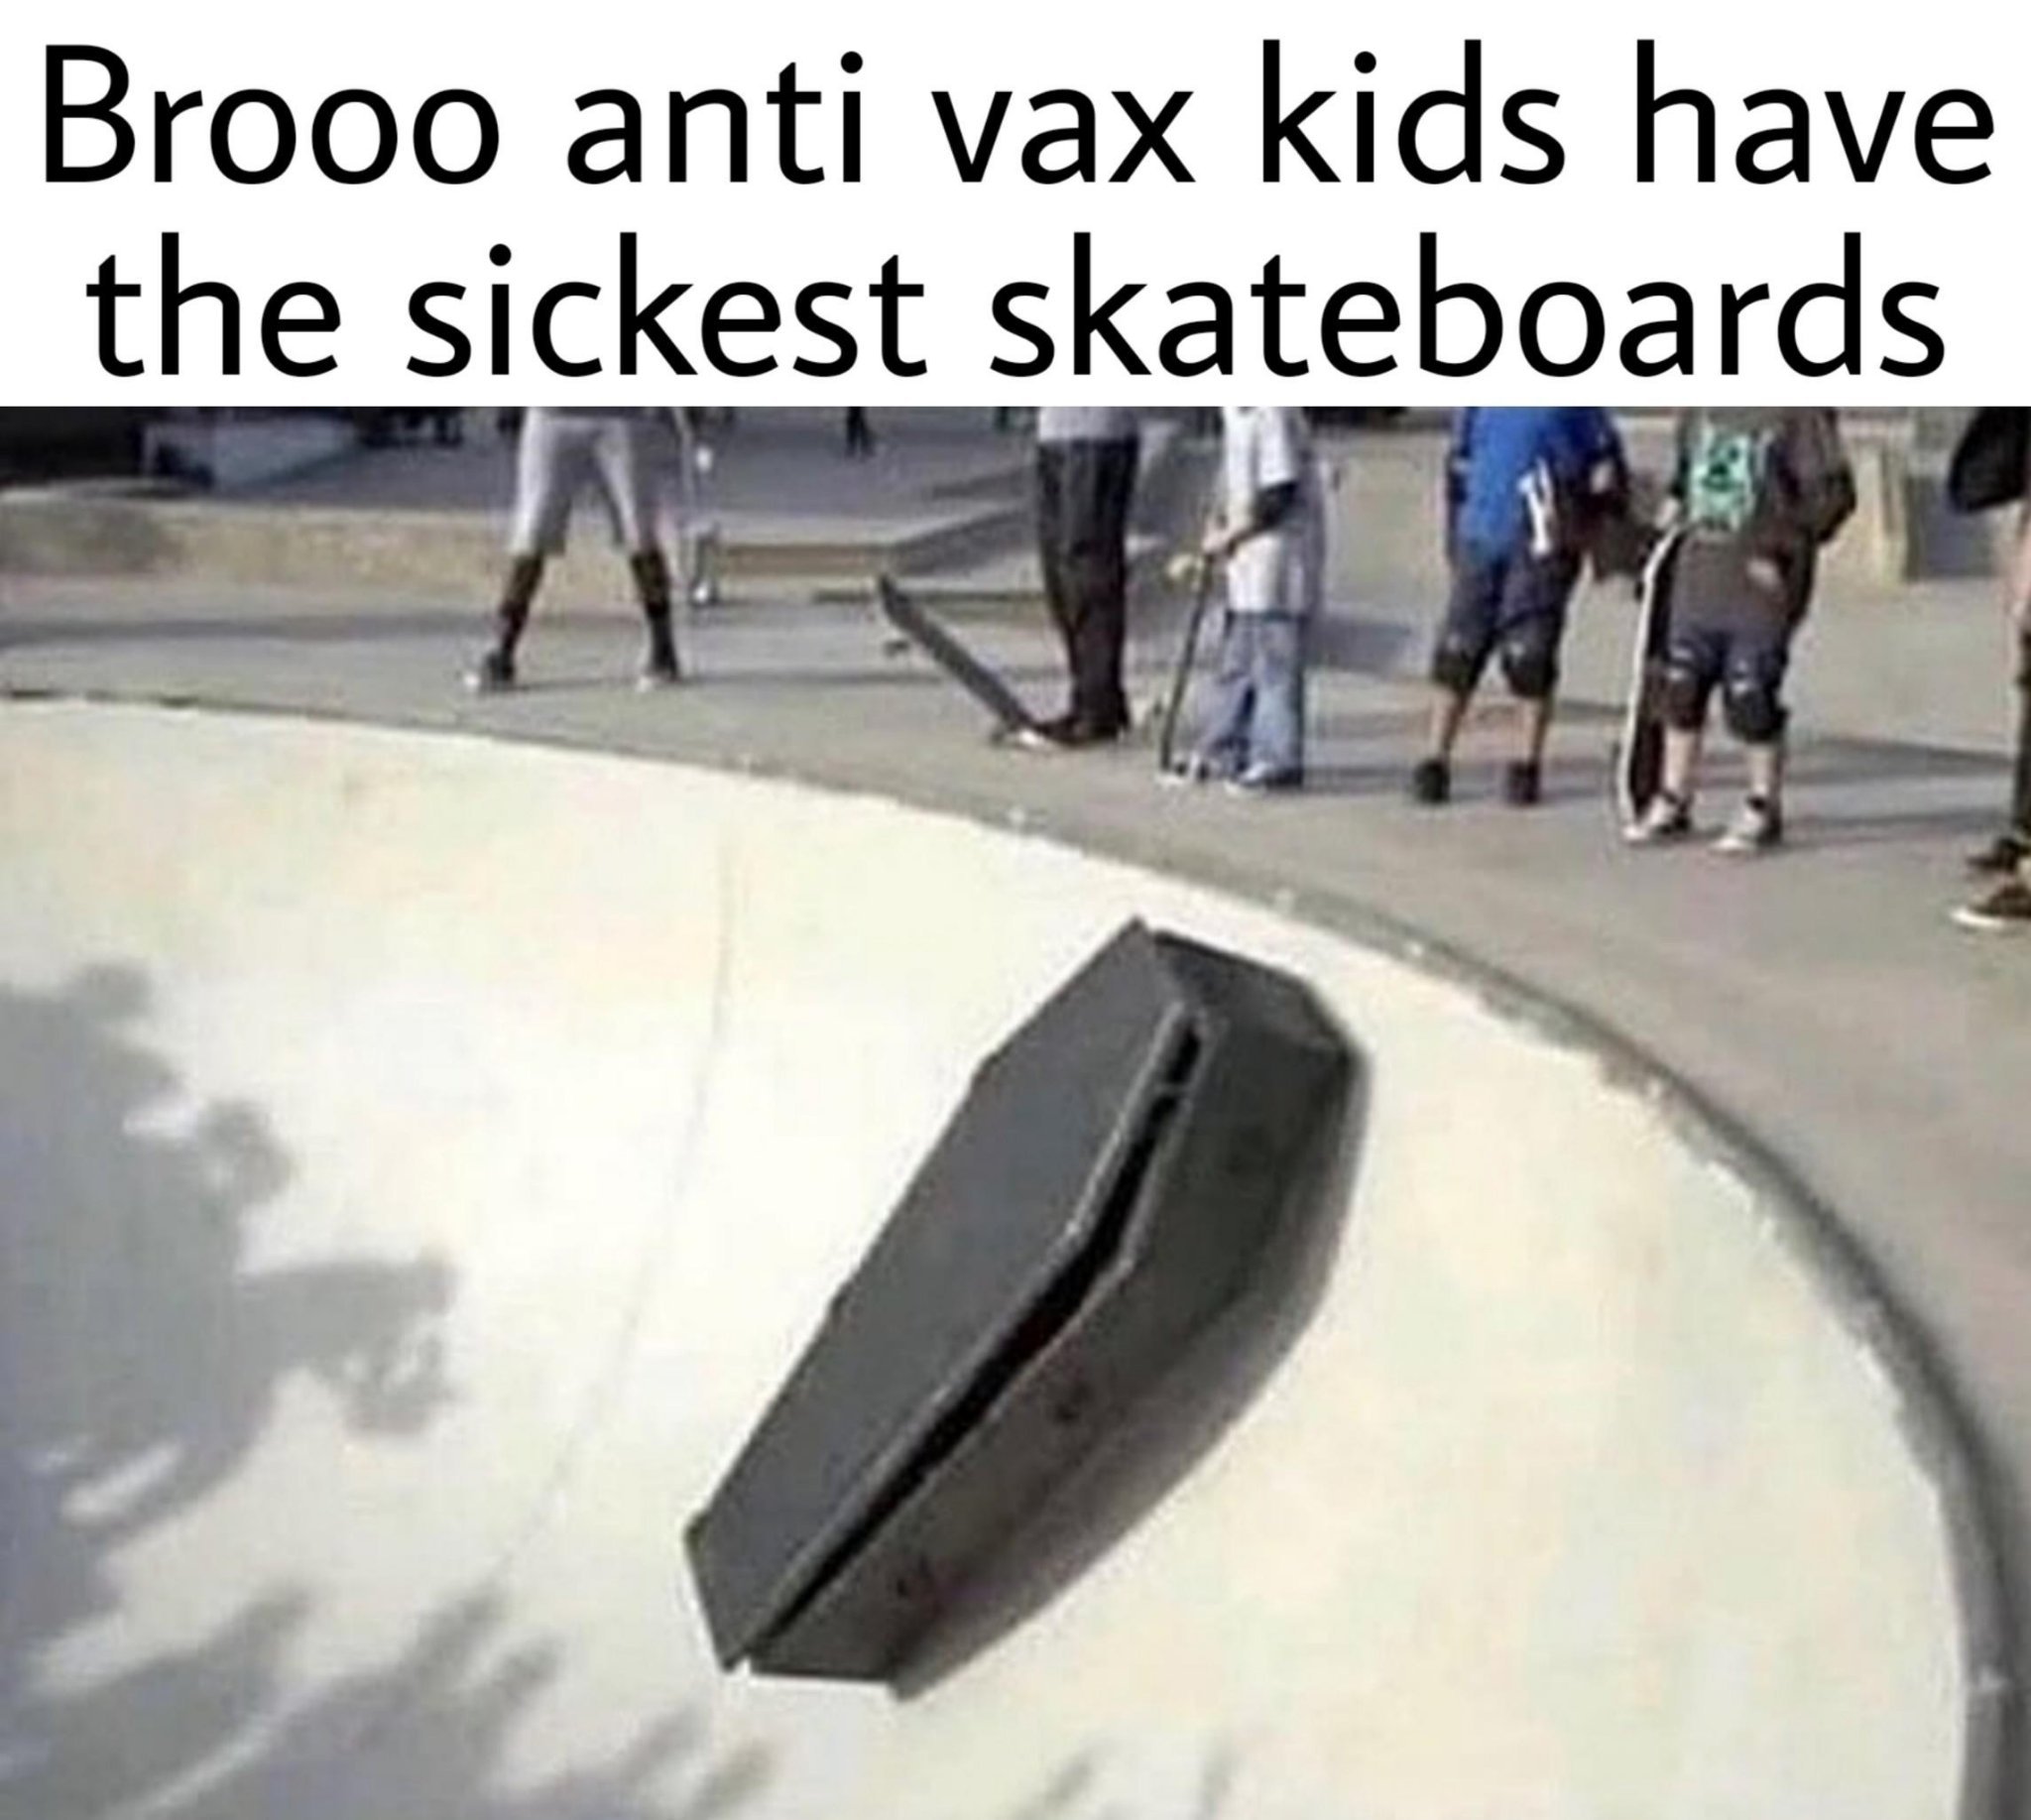 Les enfants "anti-vax" ont le pire skateboard - meme